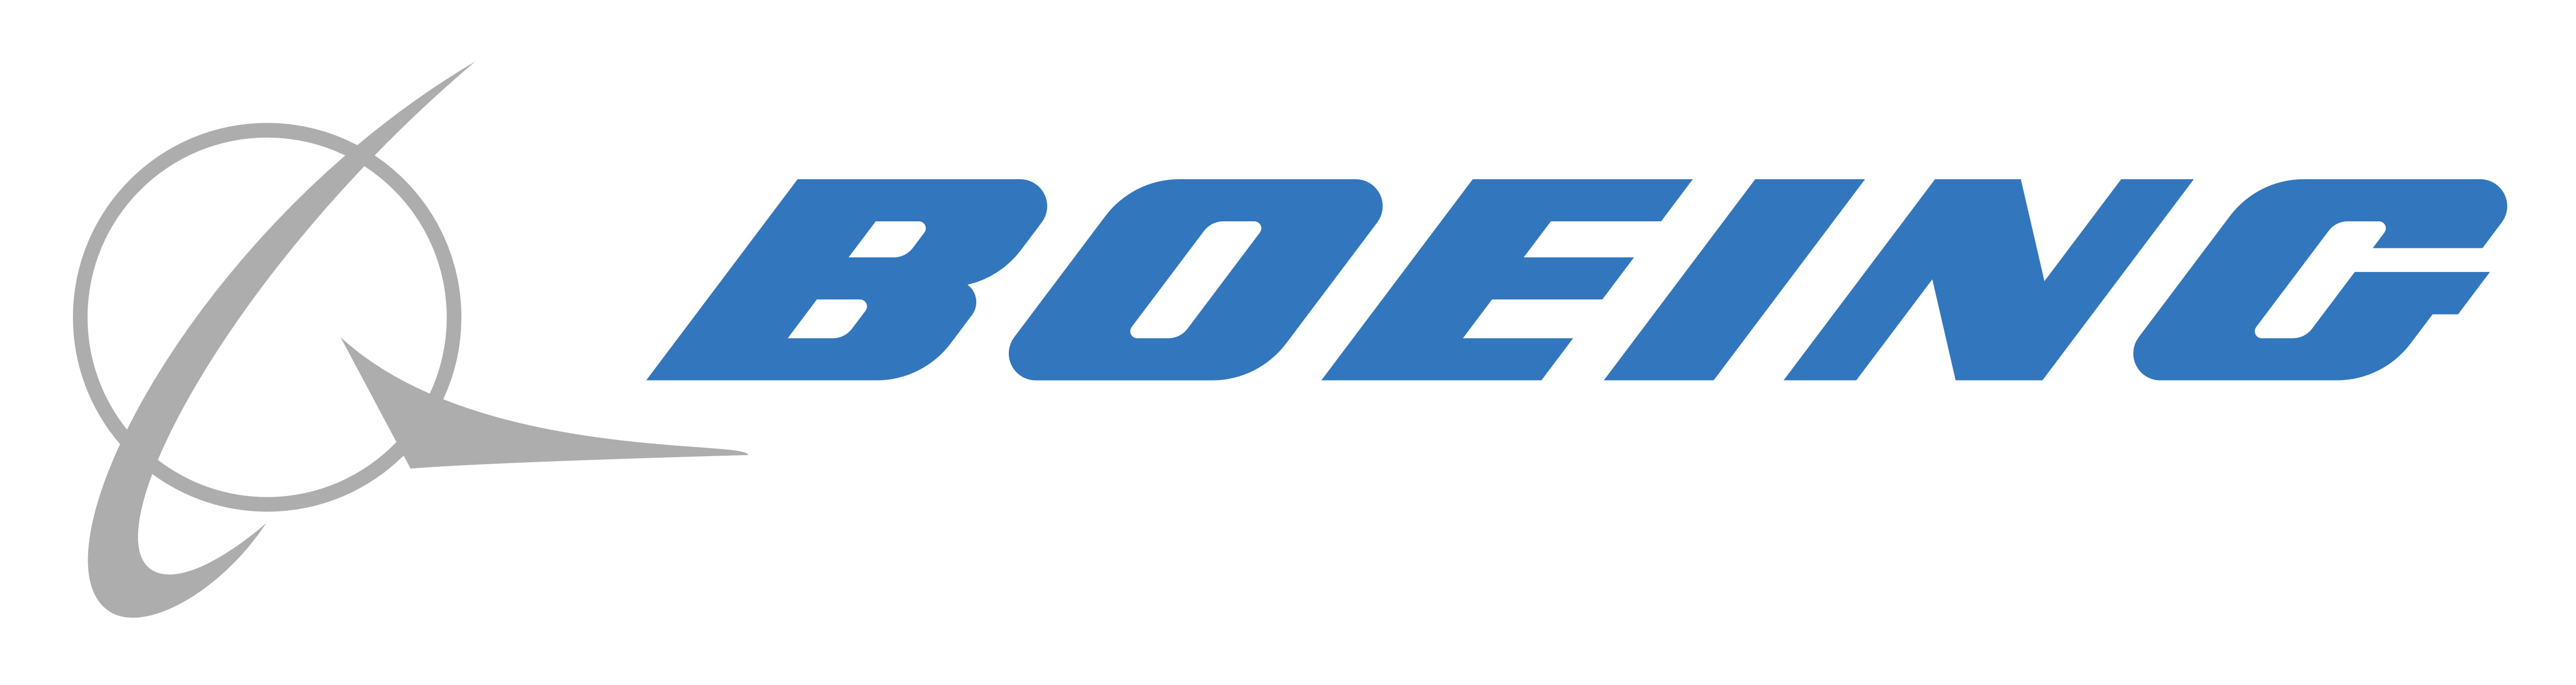 Boeing Logo icons